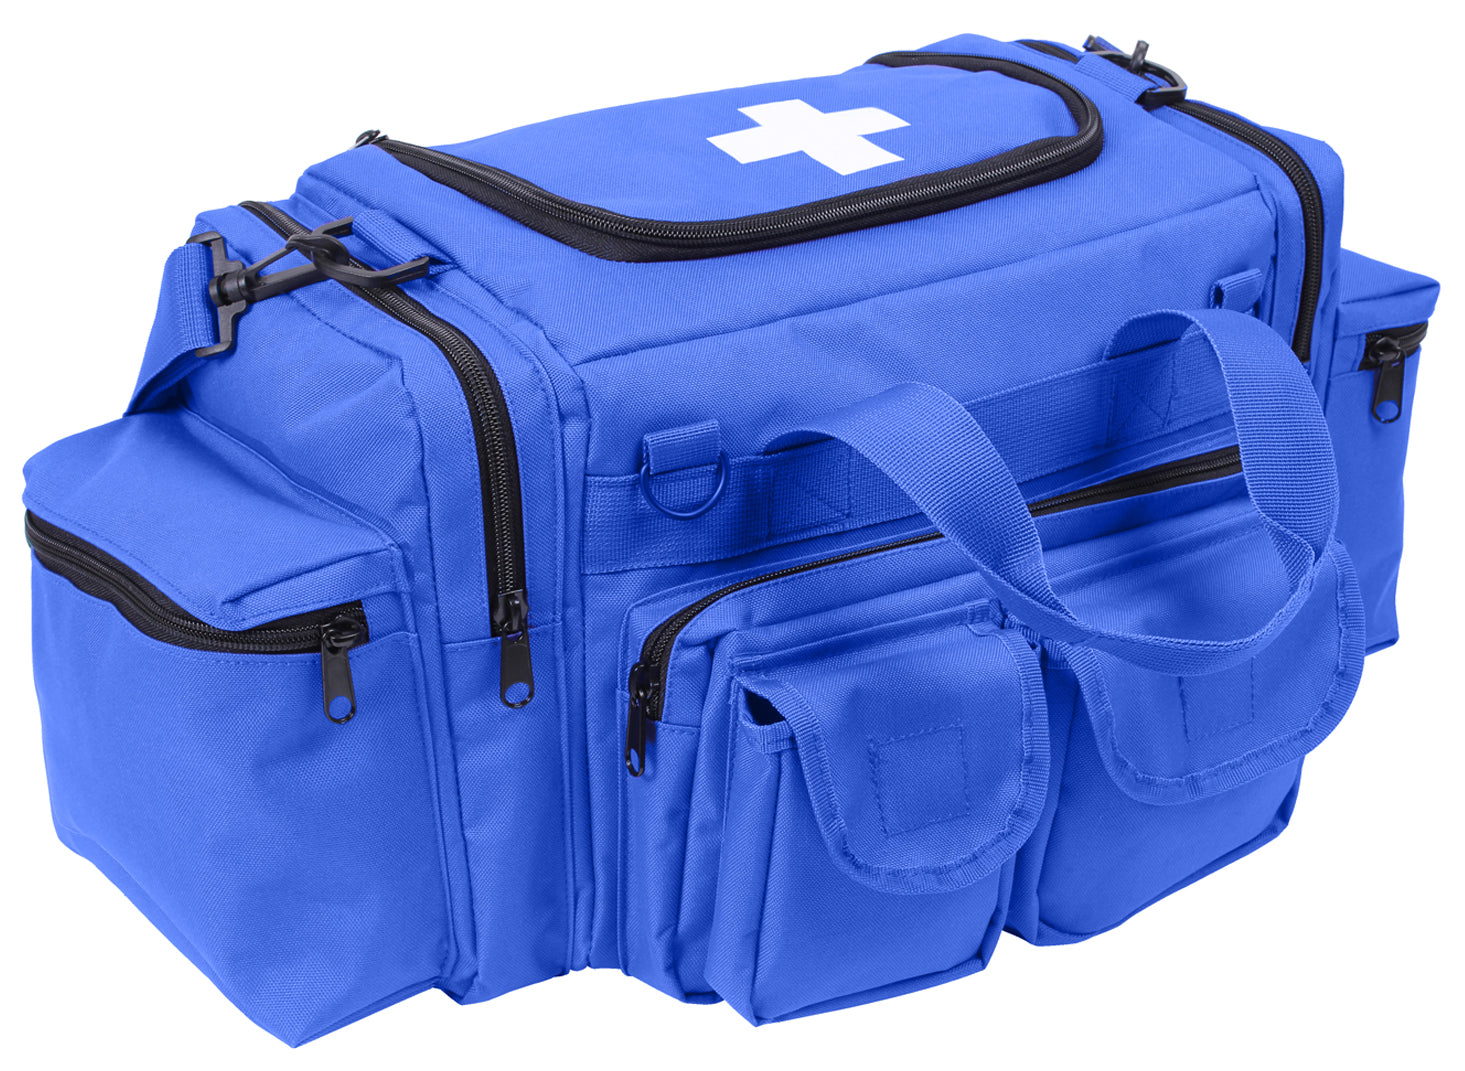 Milspec EMT Bag First Aid and First Responder Gear MilTac Tactical Military Outdoor Gear Australia